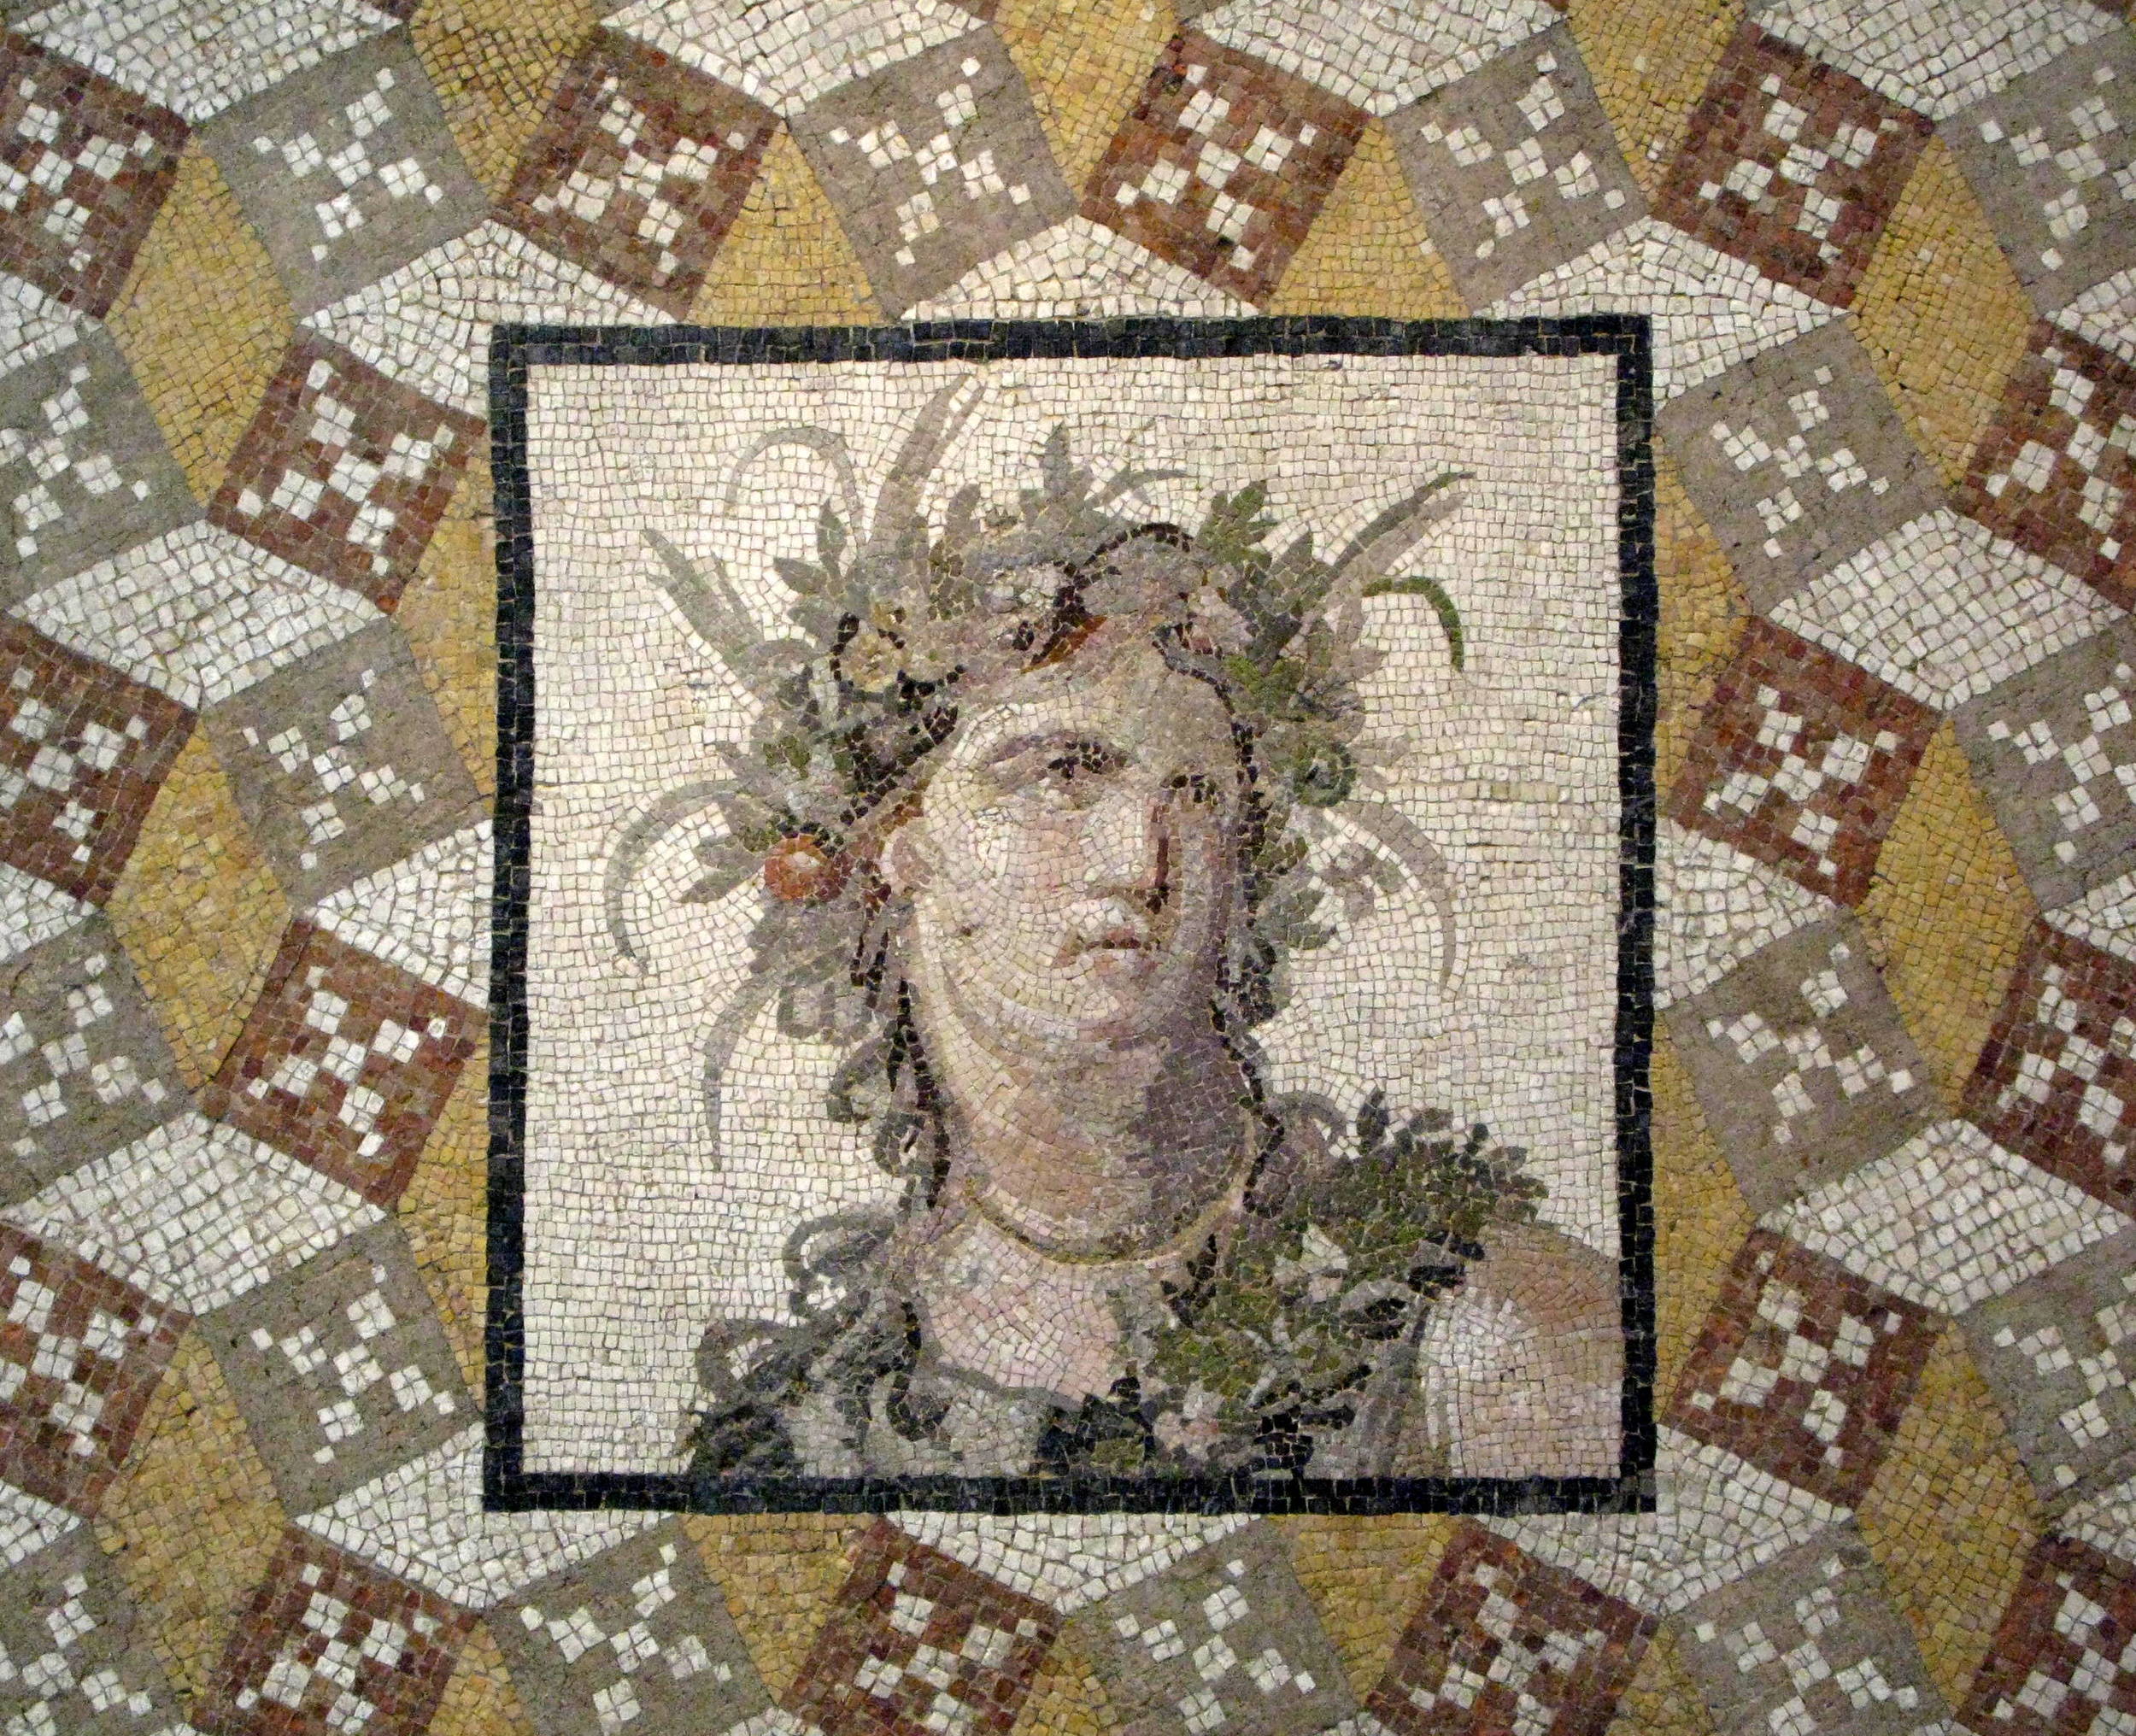  Roman mosaic, from the Metropolitan in NY. 